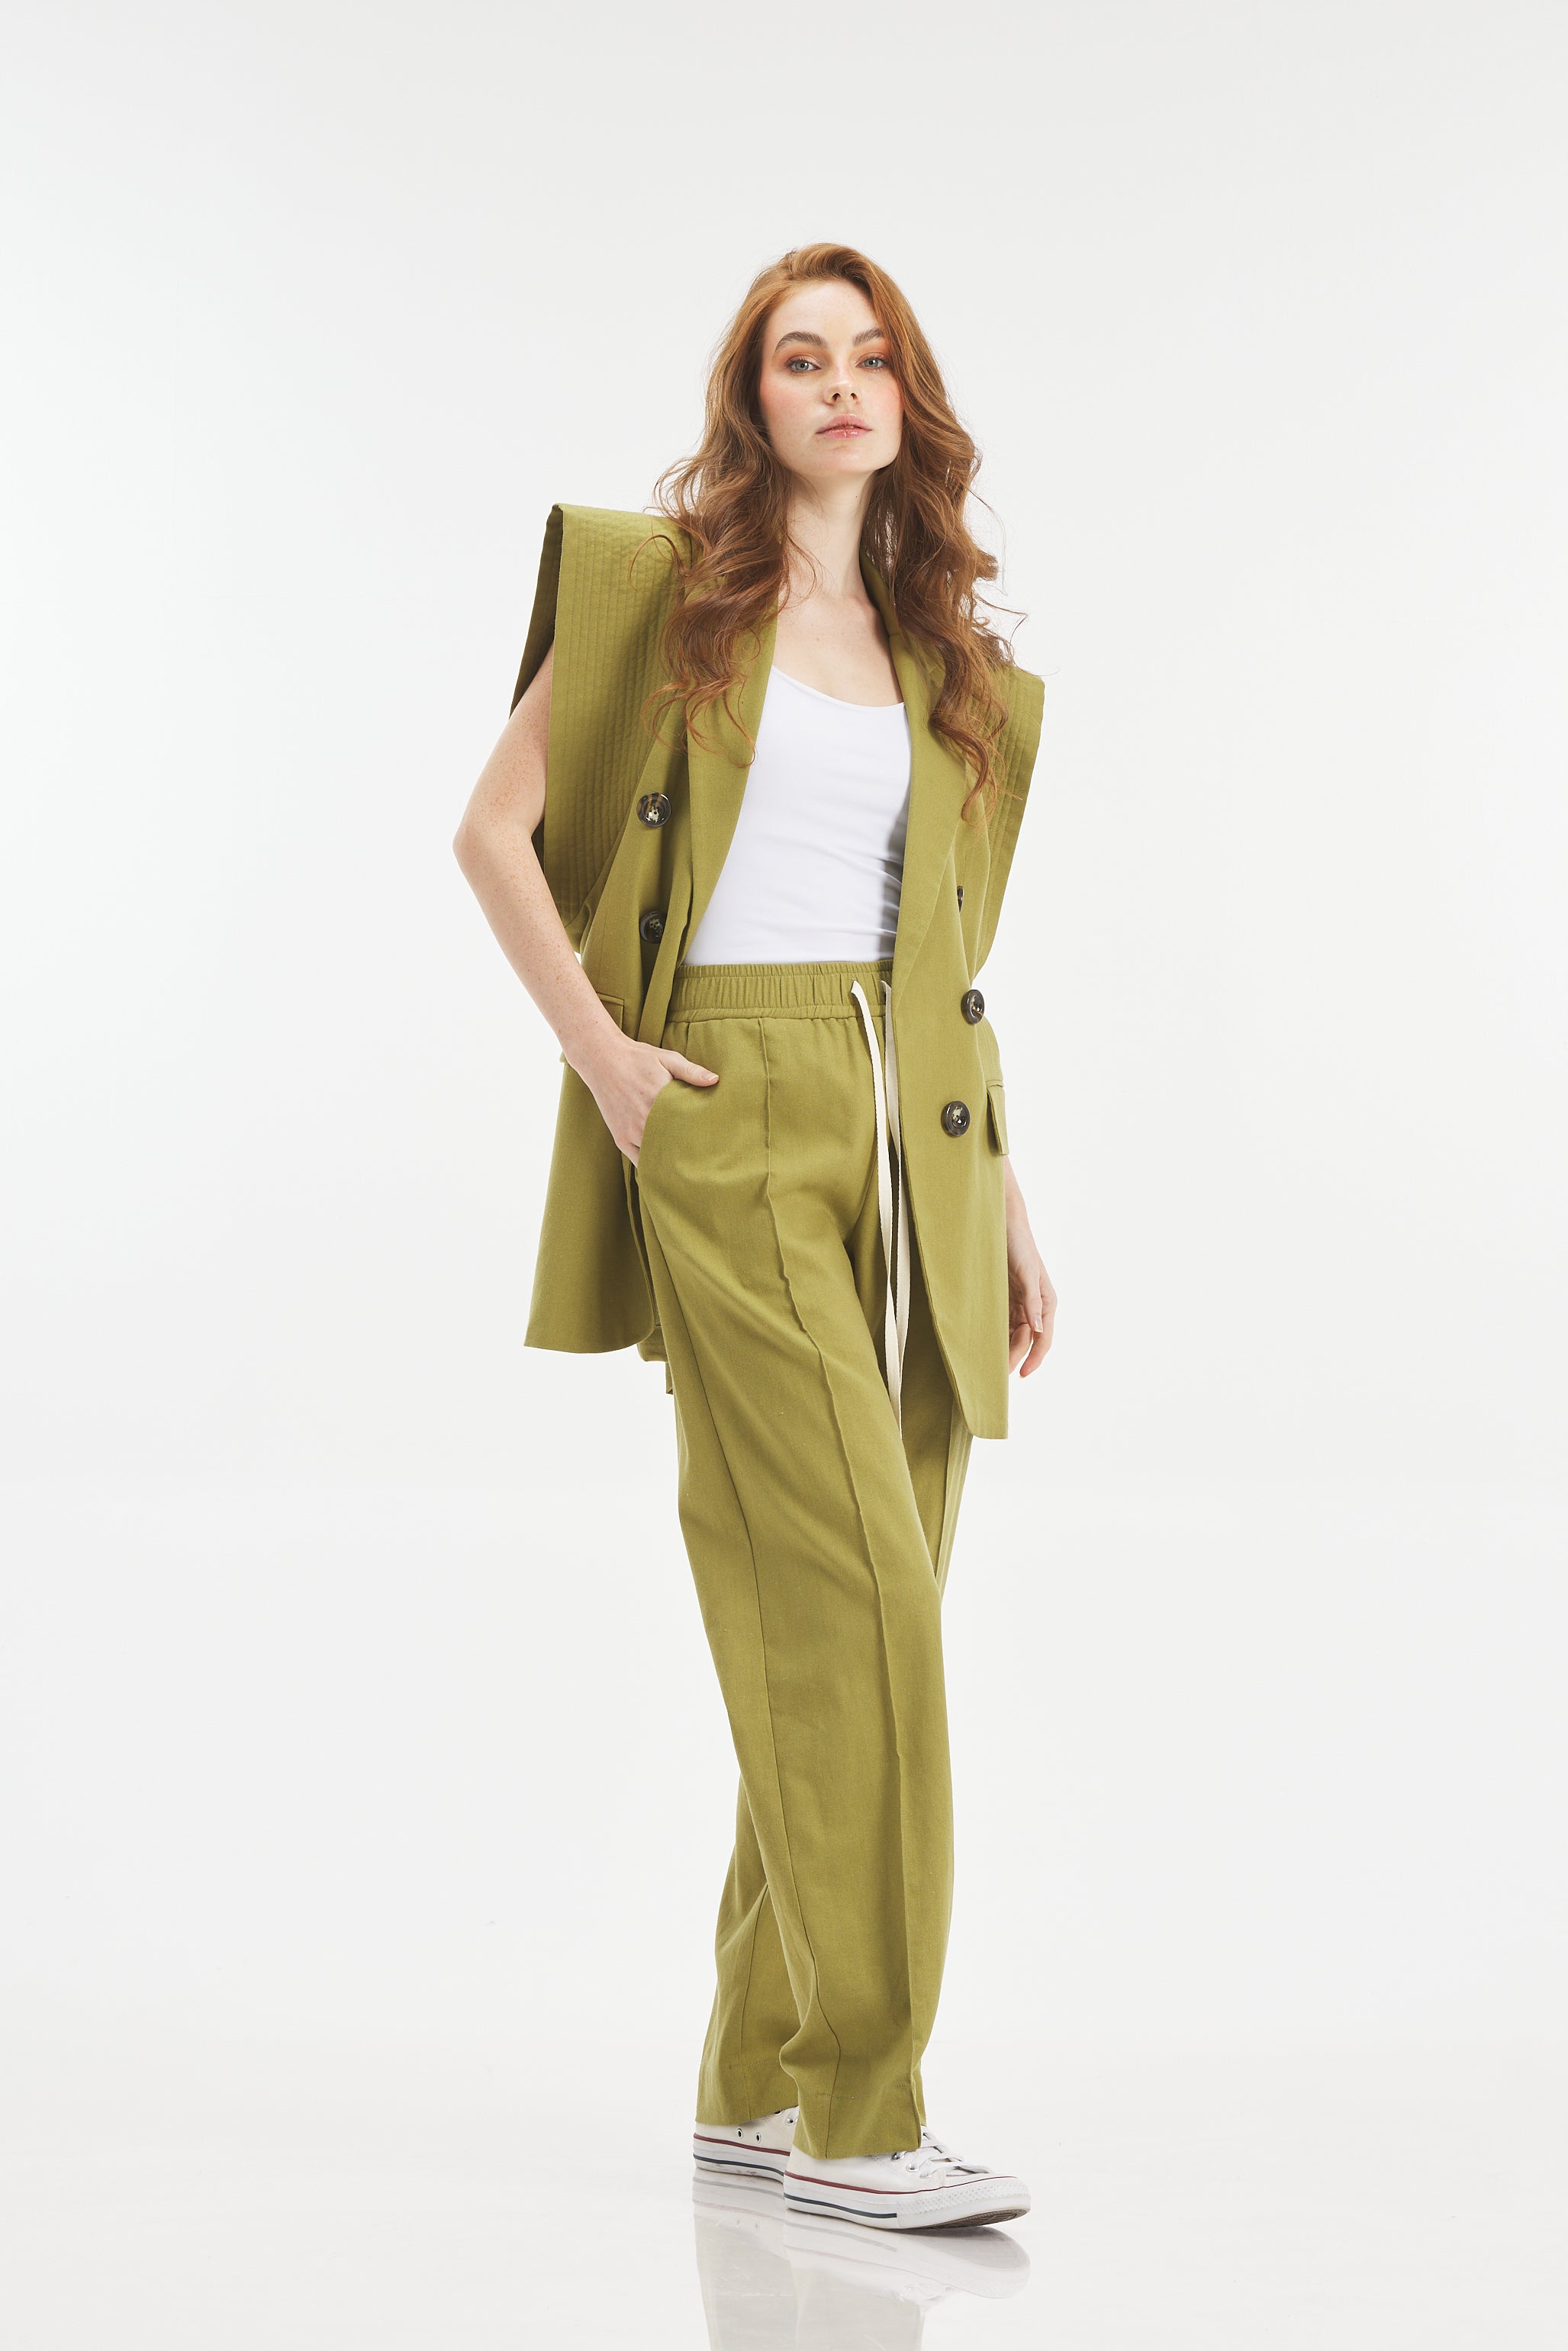 Apple green linen pants